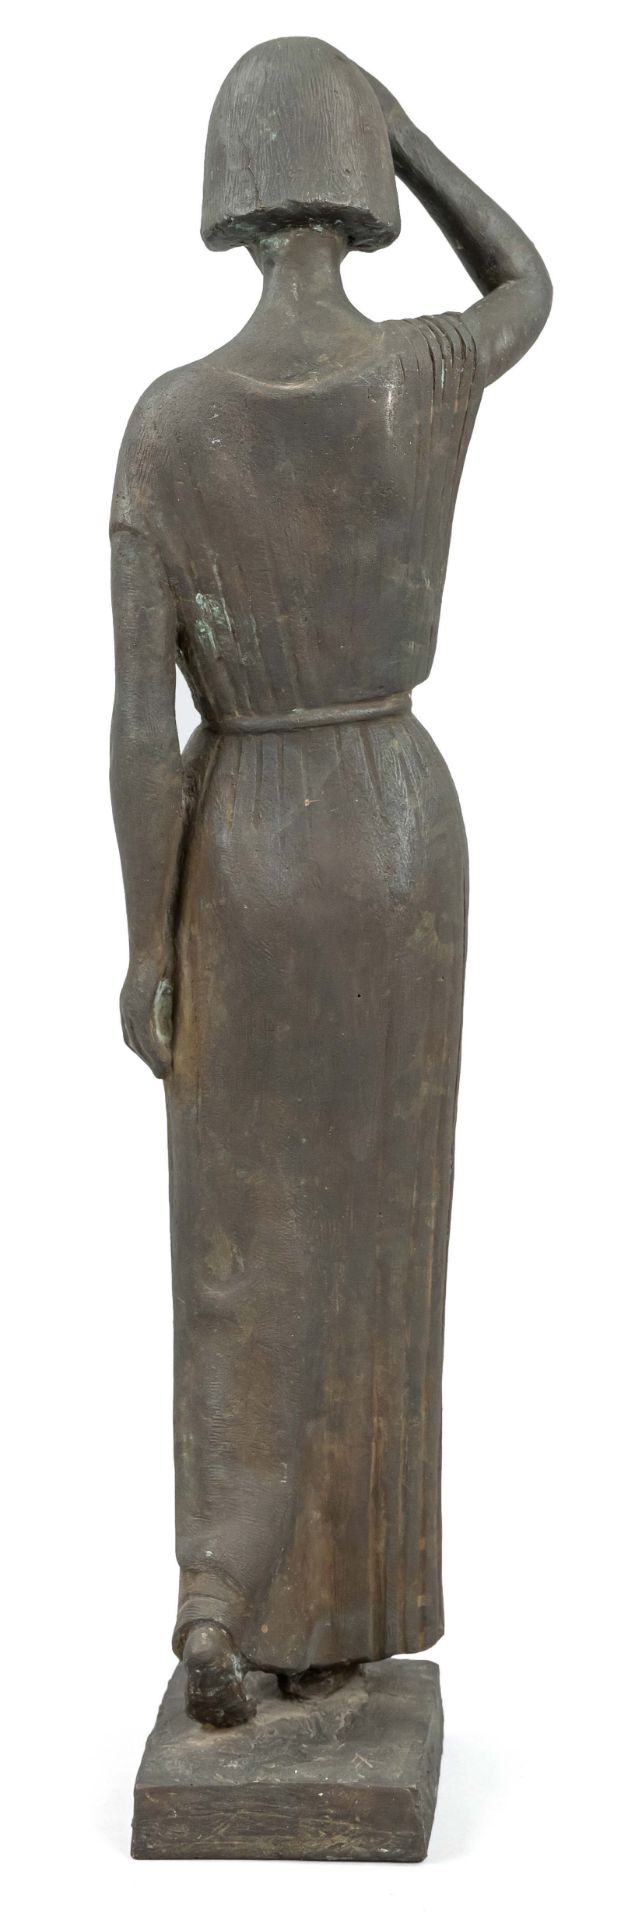 Marcks, Gerhard. 1889 Berlin - 1981 Burgbrohl. Small Amalasvinta. 1972. hollow bronze casting, - Image 2 of 2